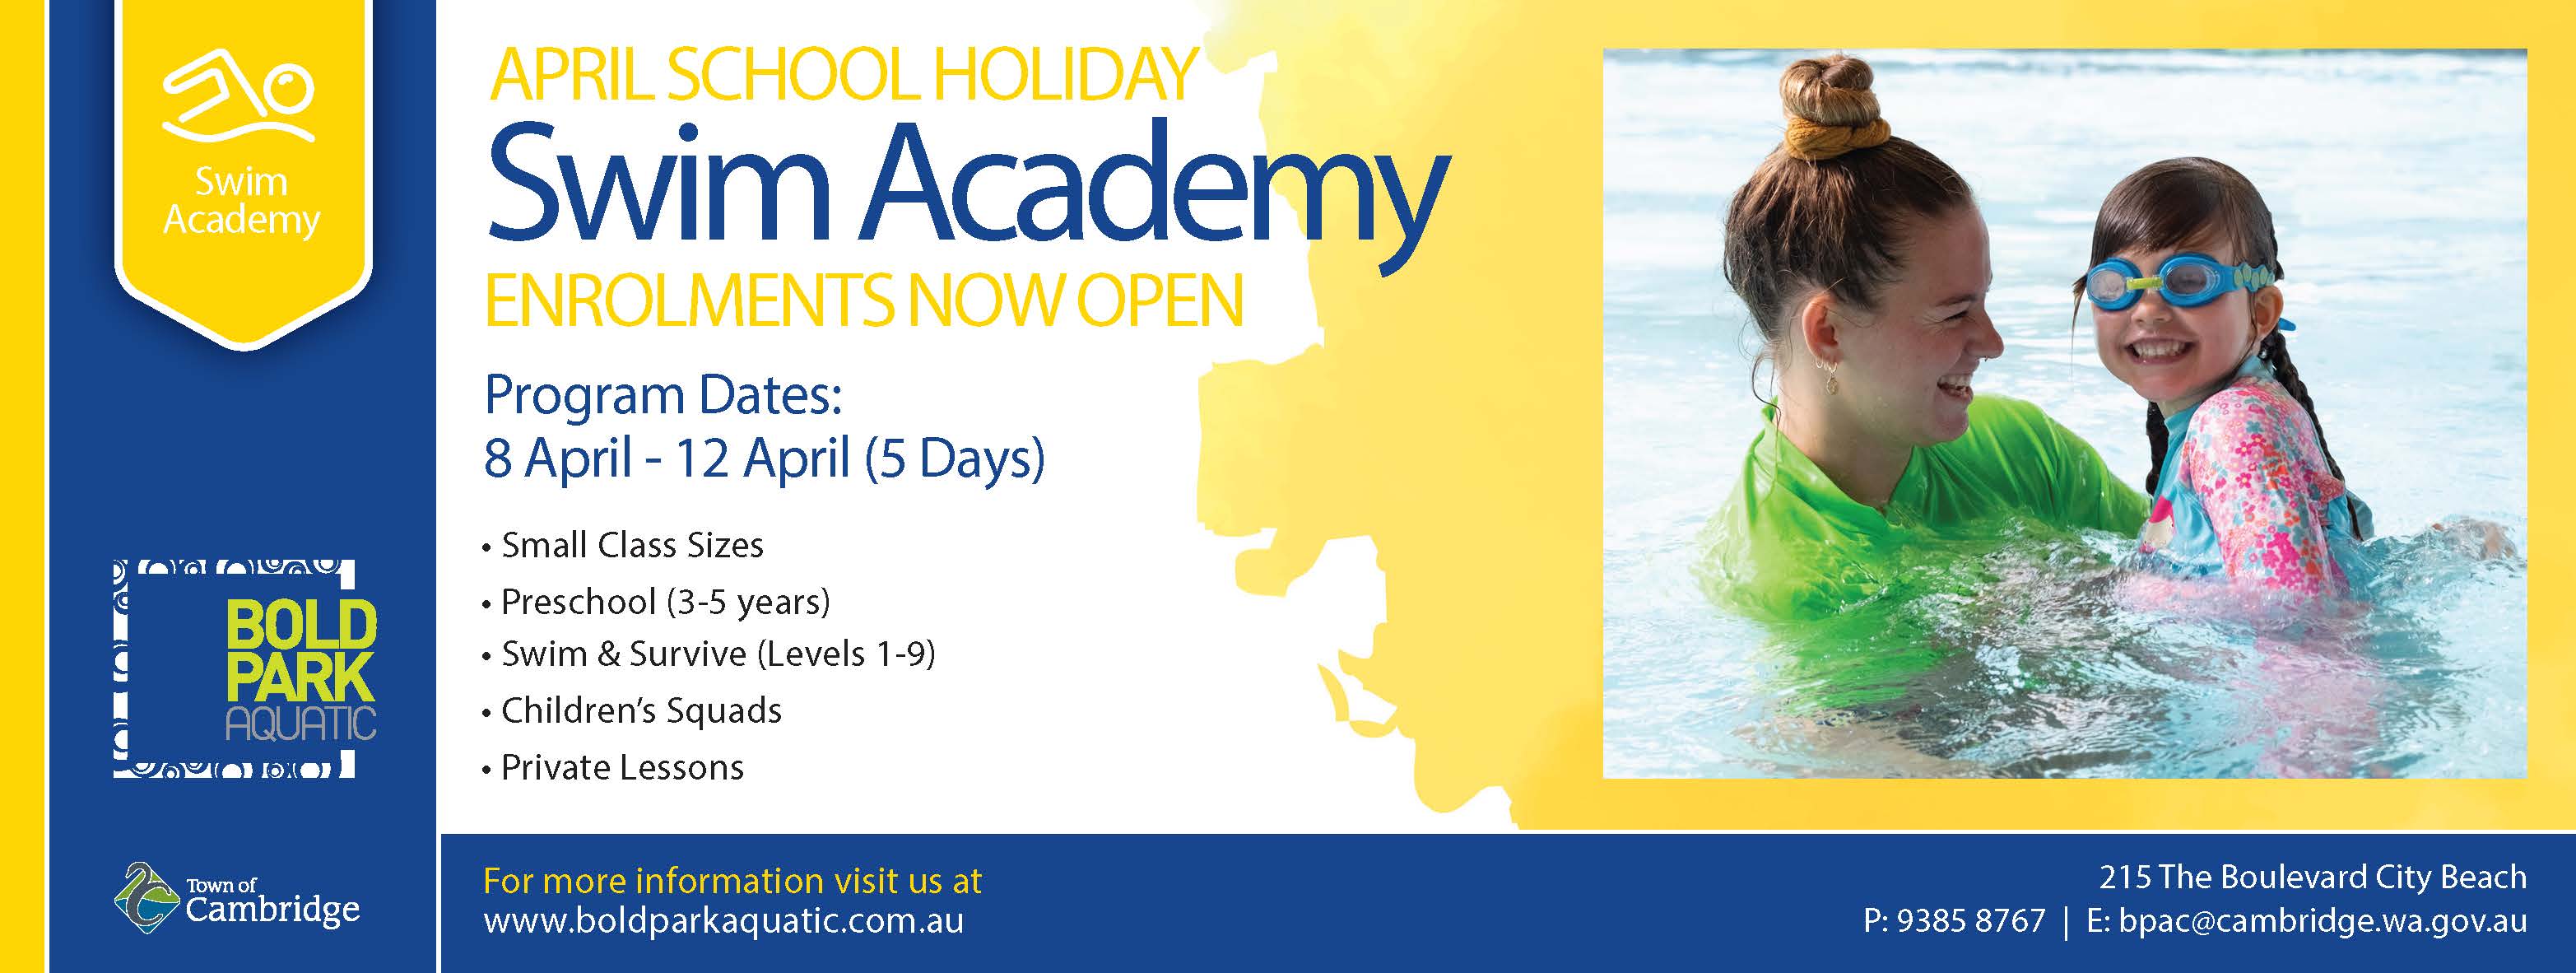 Swim-Academy-April-Holidays-Website.jpg